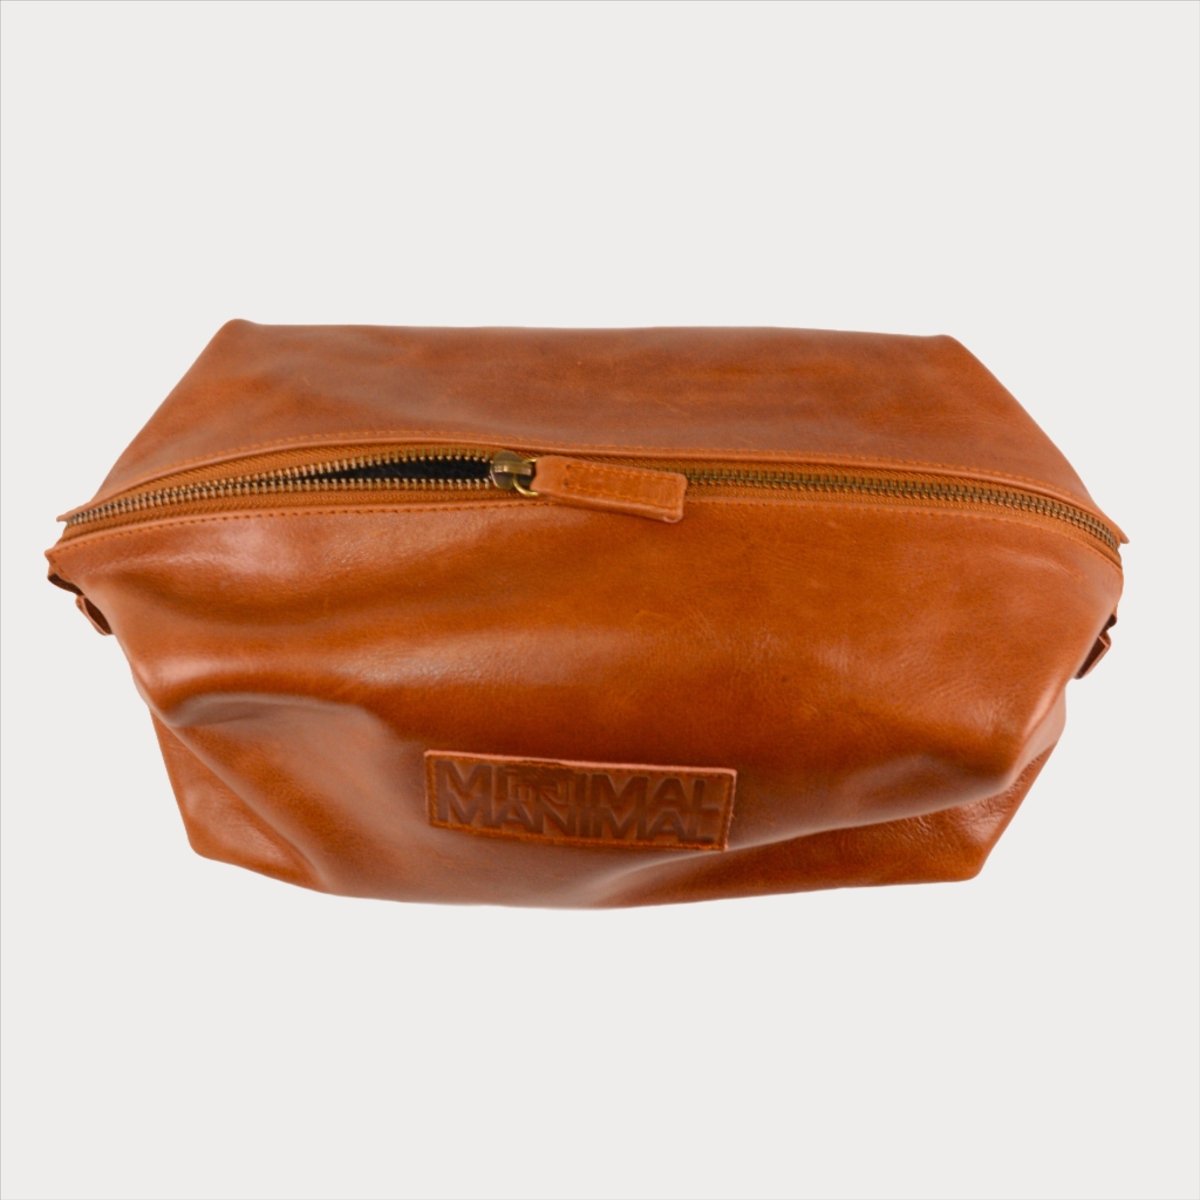 Leather Toiletry Bag - Cognac - Minimal Manimal